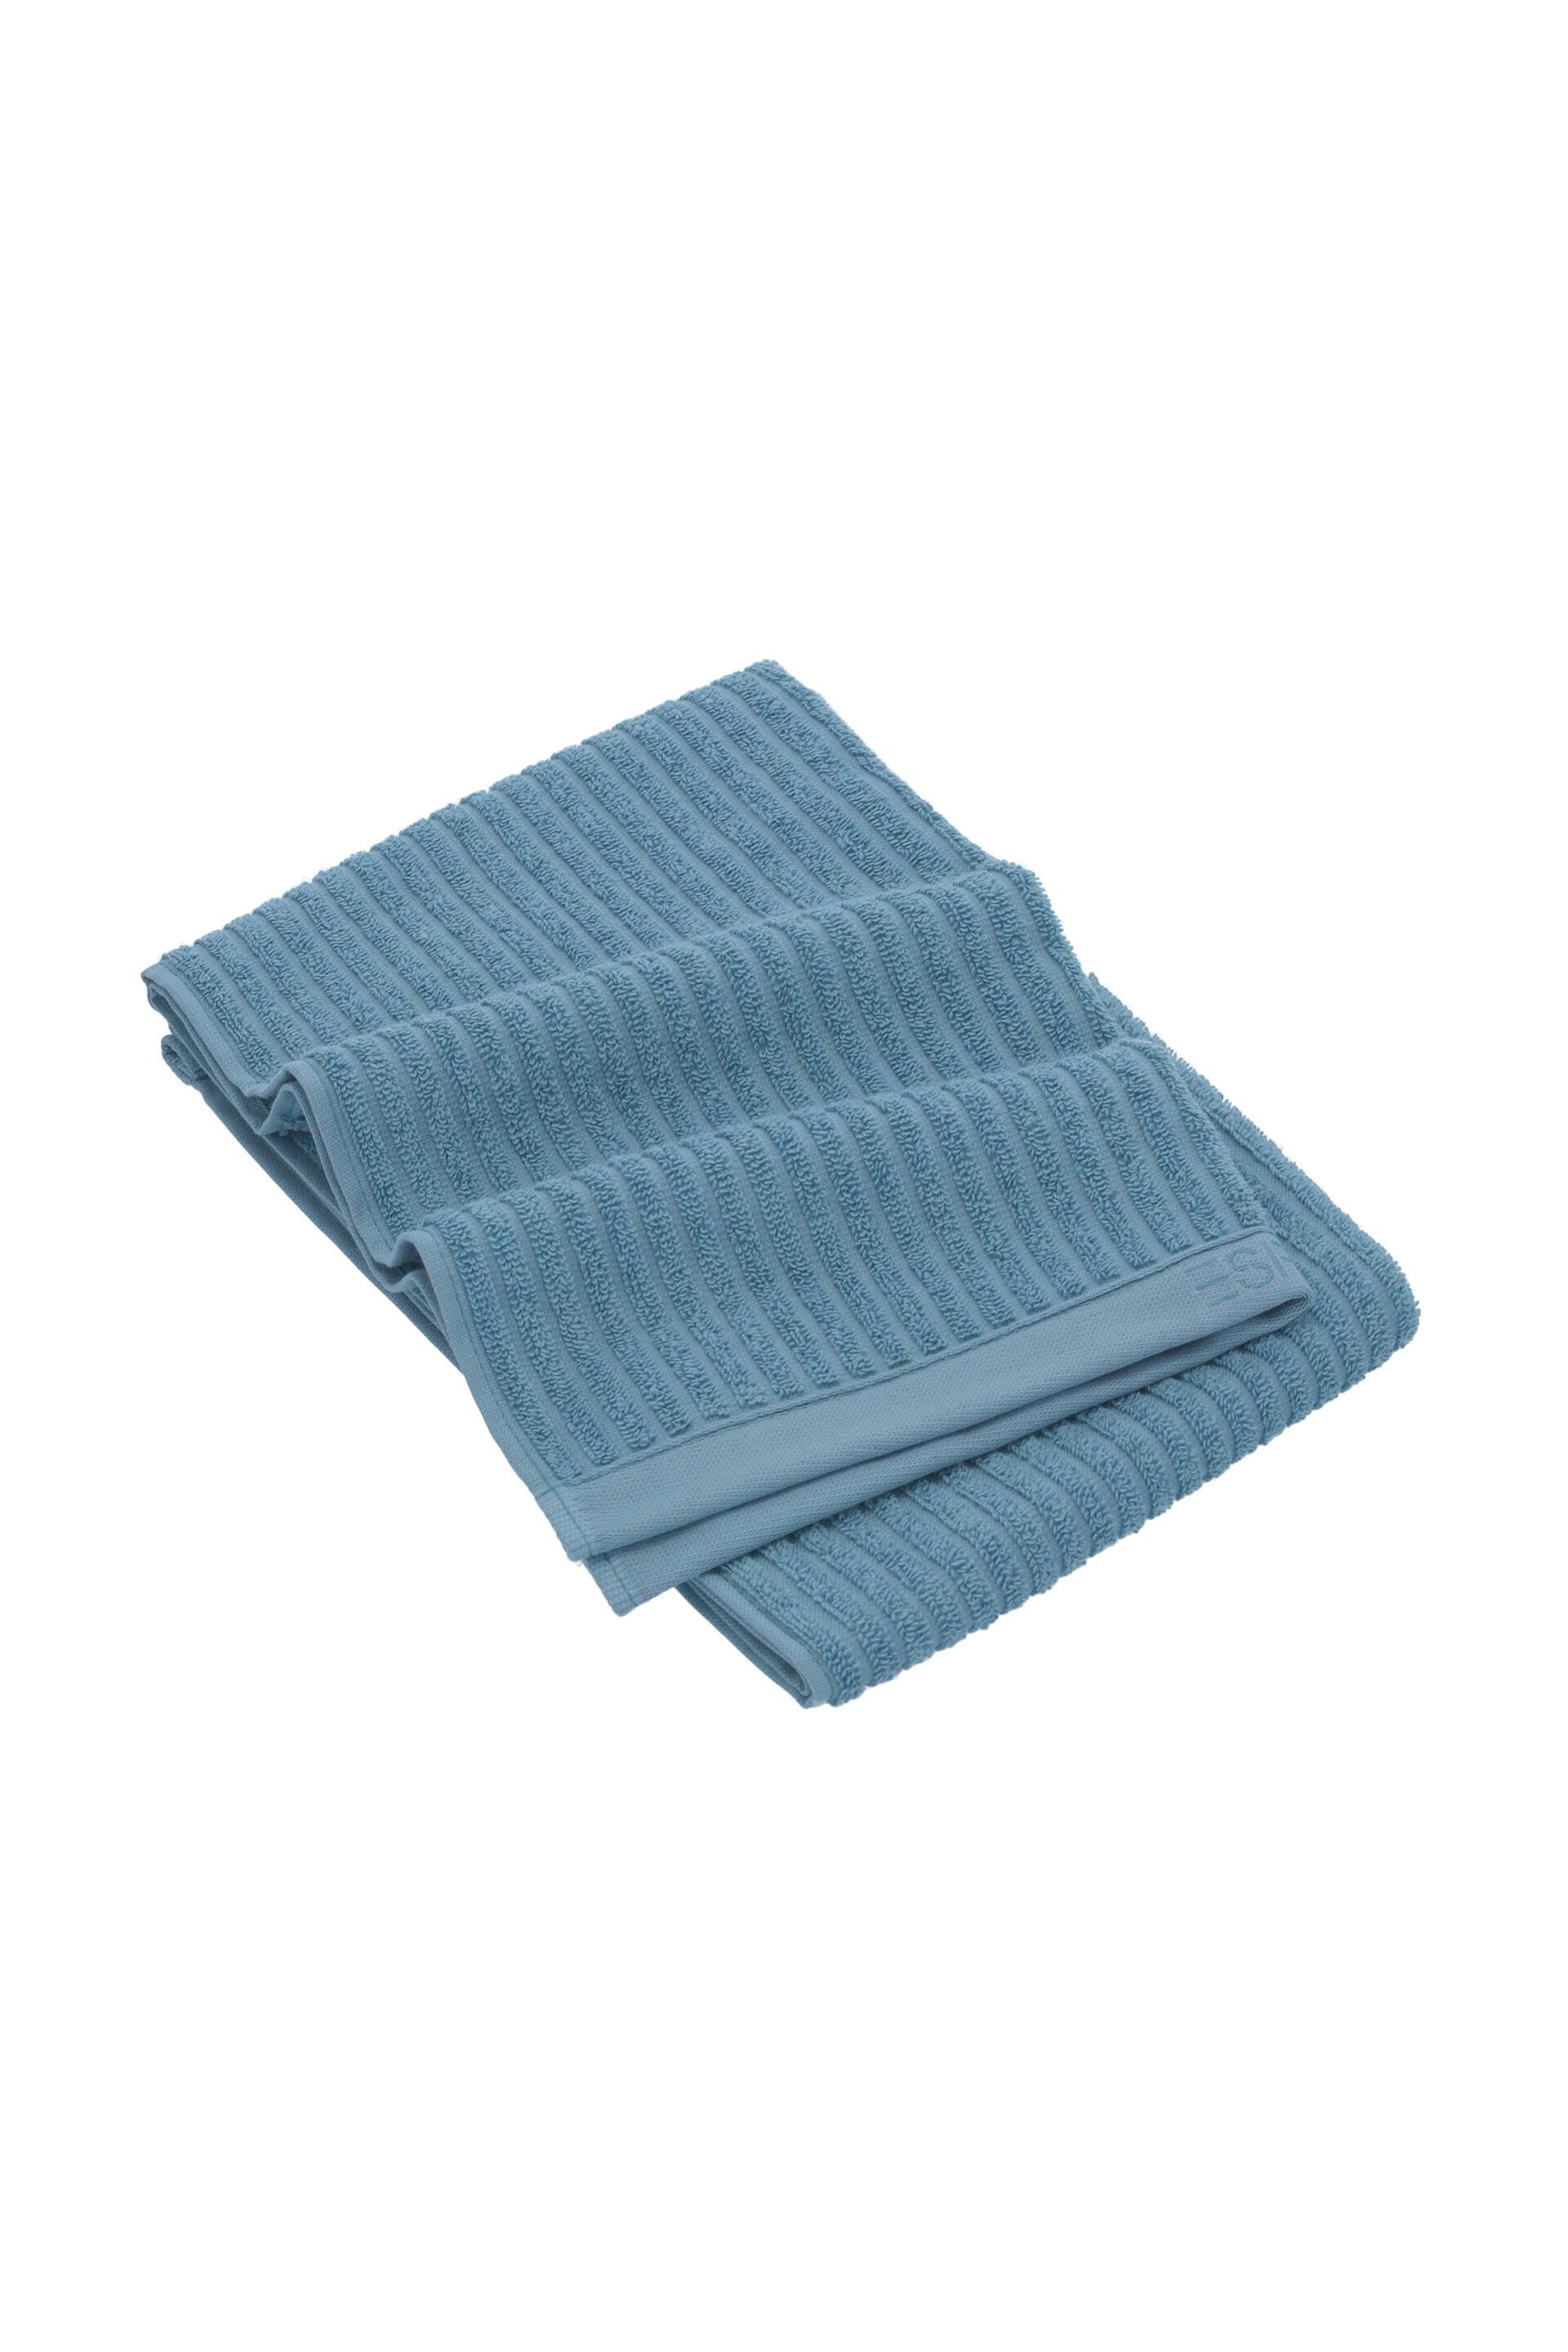 Esprit Modern lines towel hand